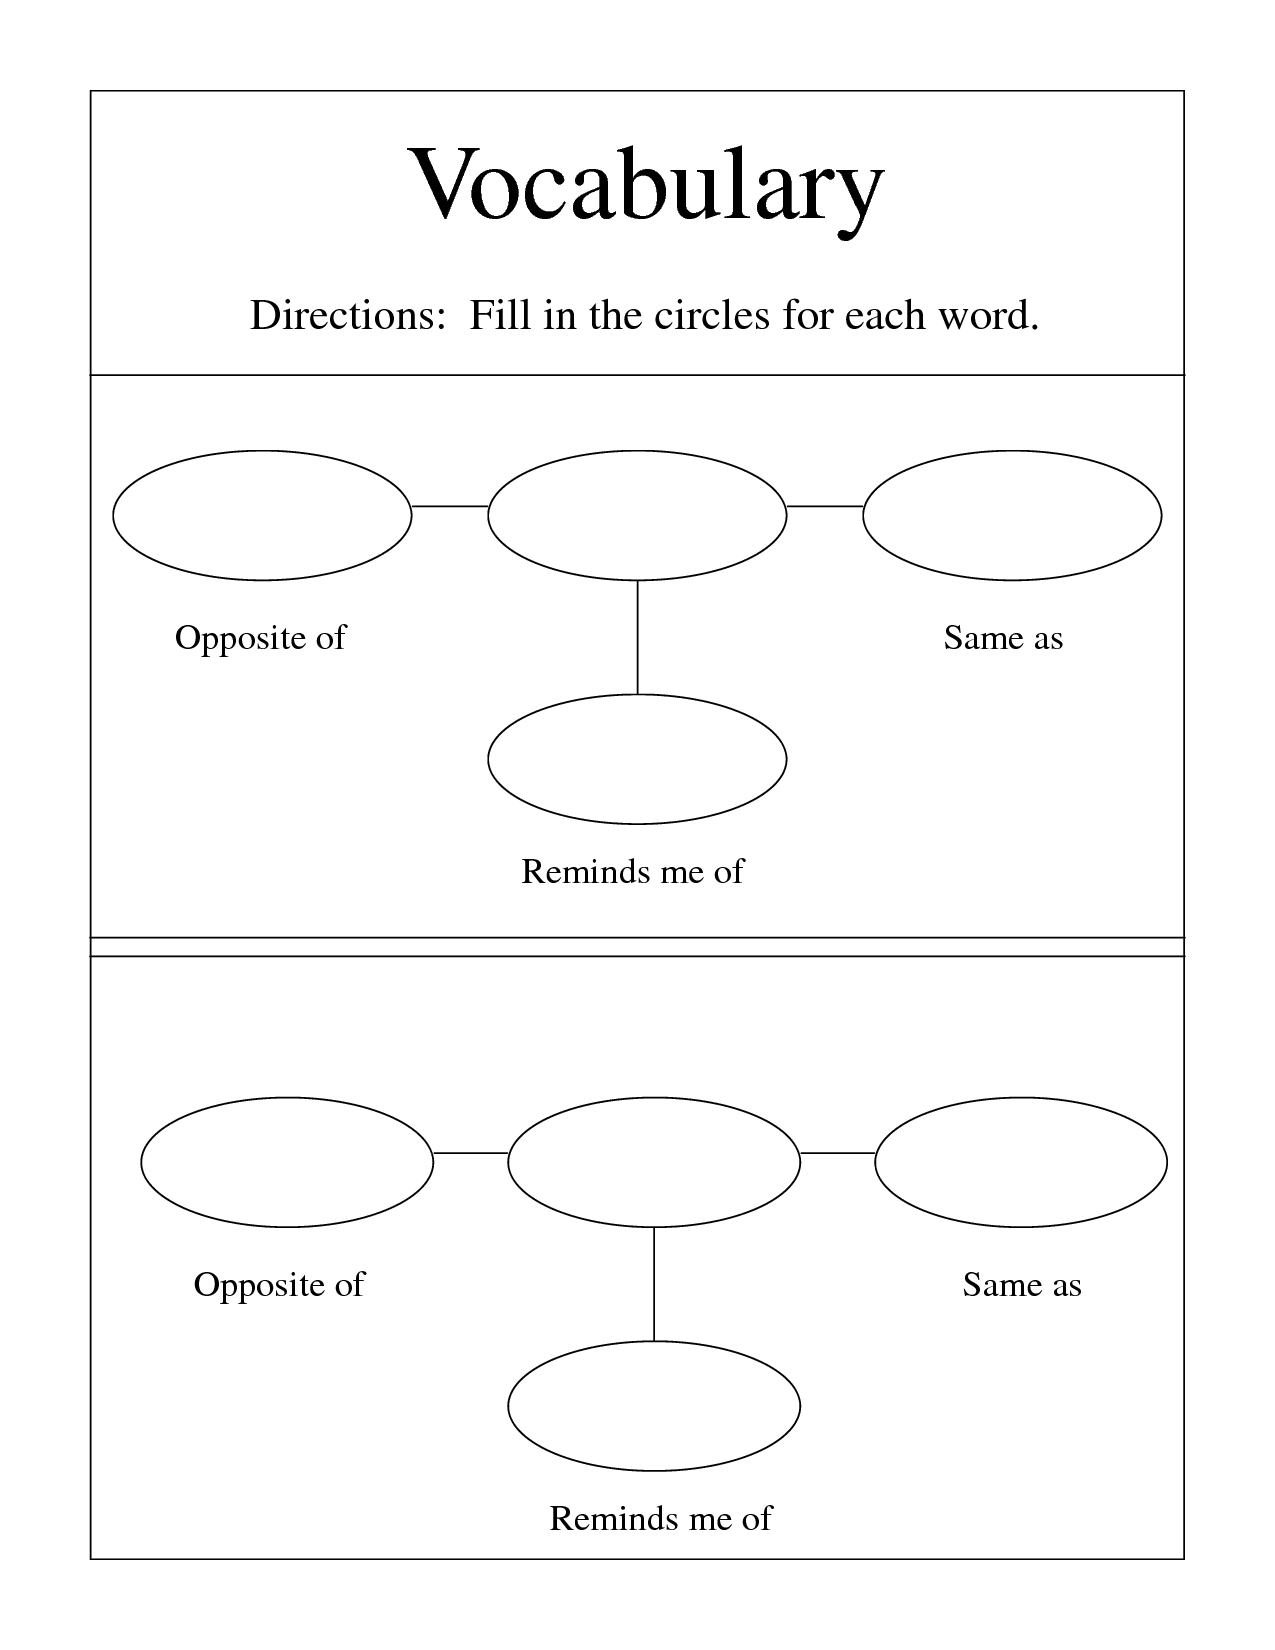 Blank Vocabulary Diagram Image